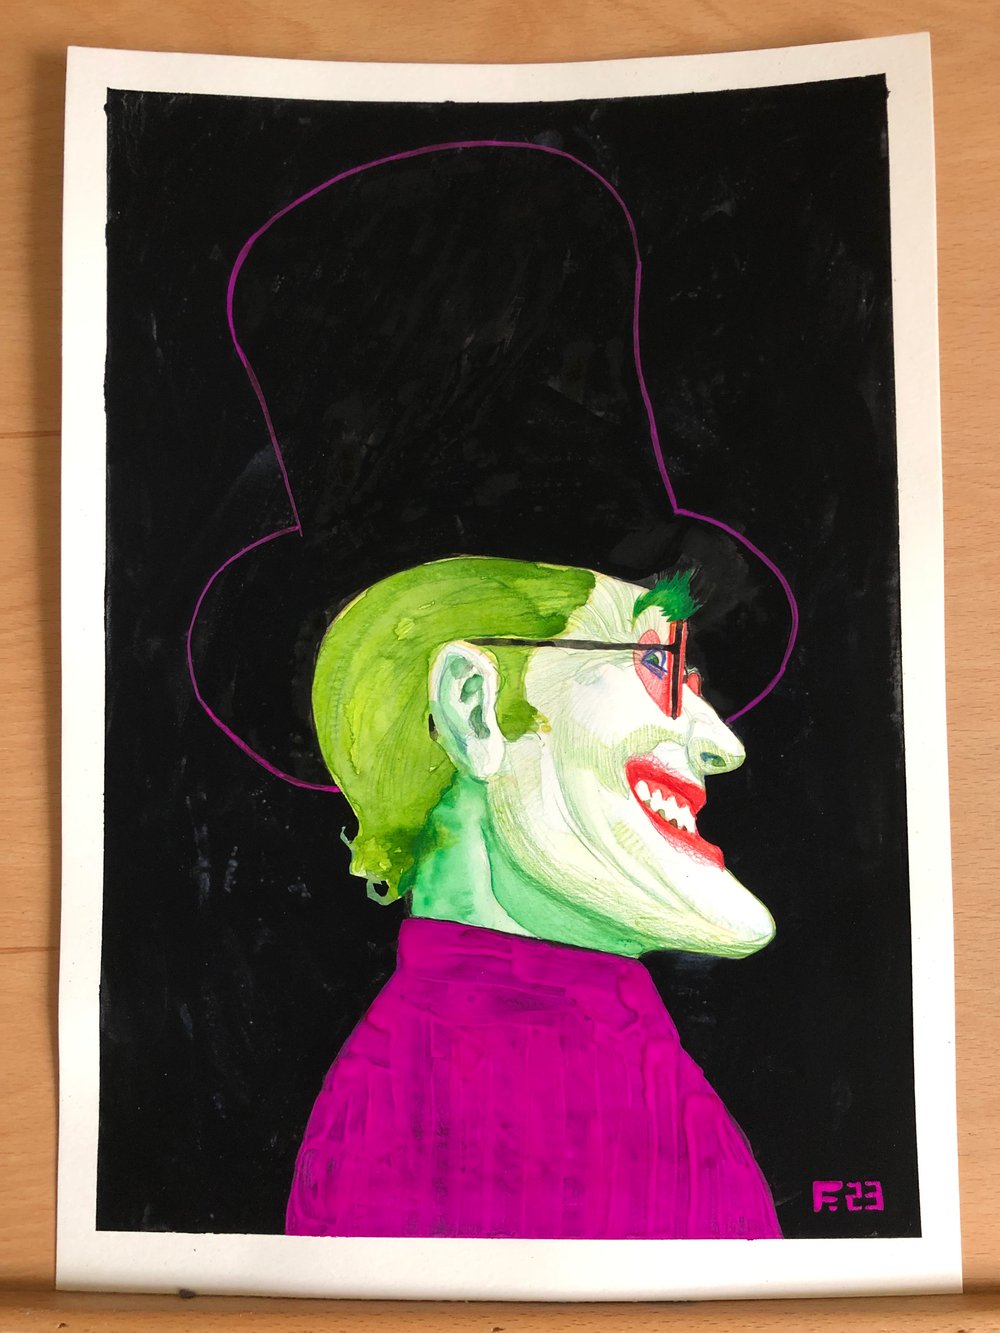 Image of Joker portrait